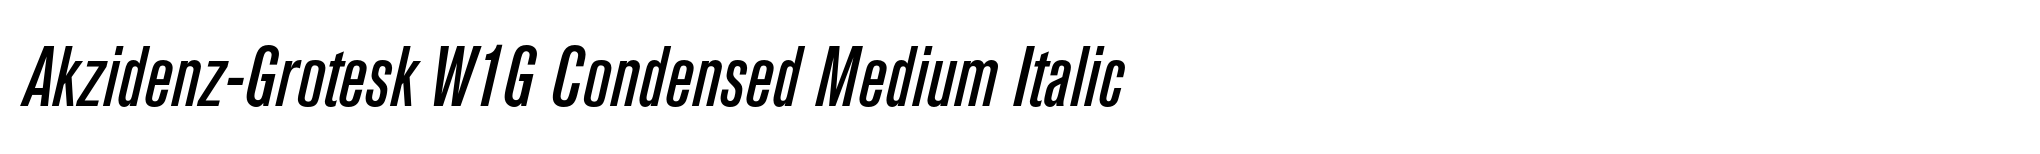 Akzidenz-Grotesk W1G Condensed Medium Italic image